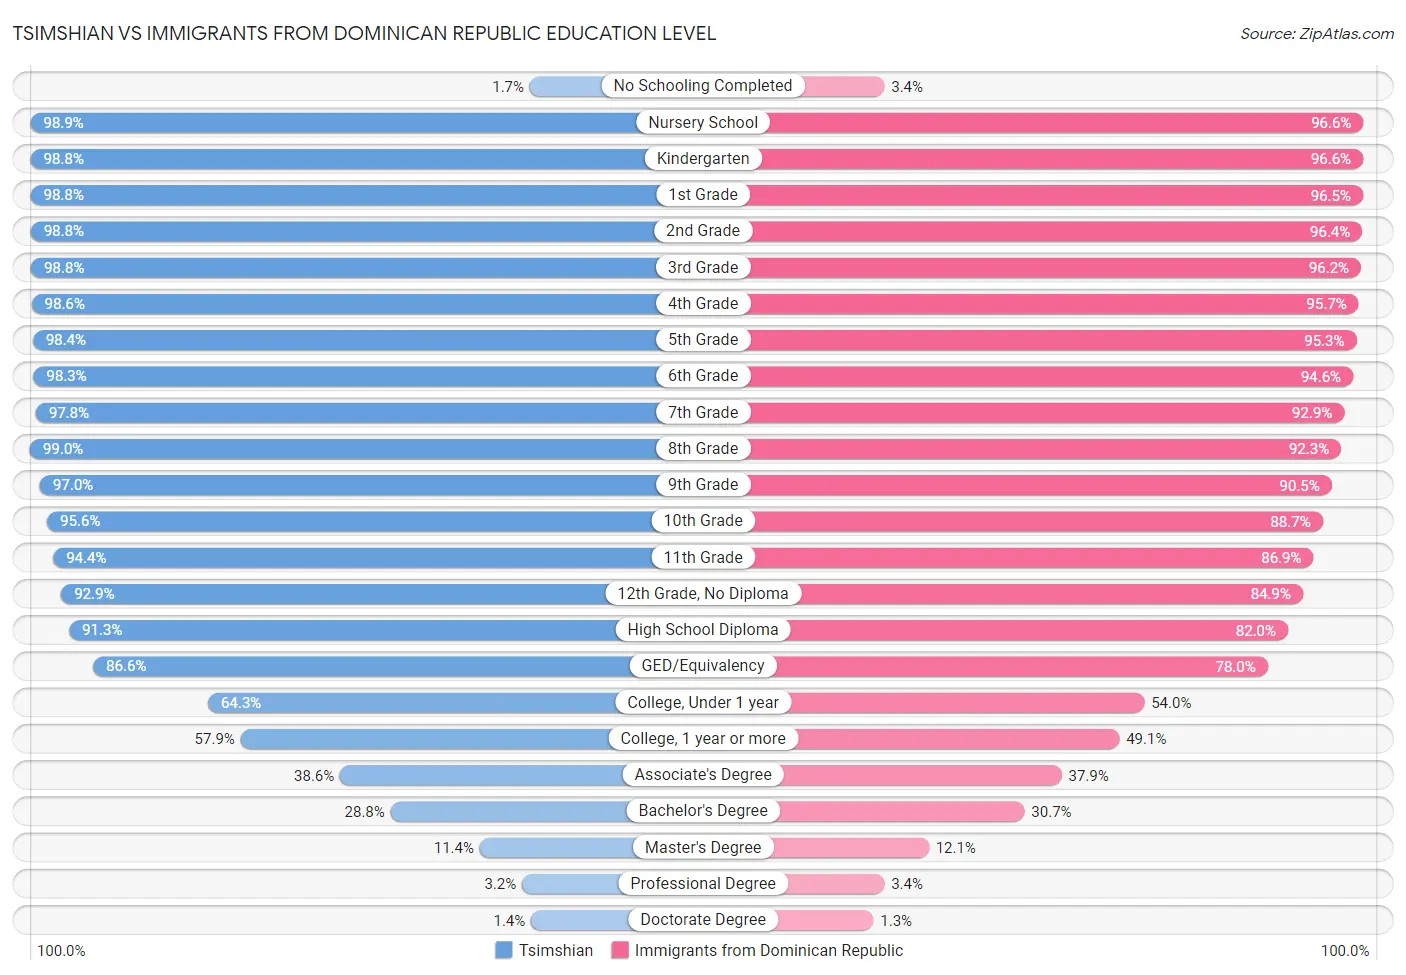 Tsimshian vs Immigrants from Dominican Republic Education Level